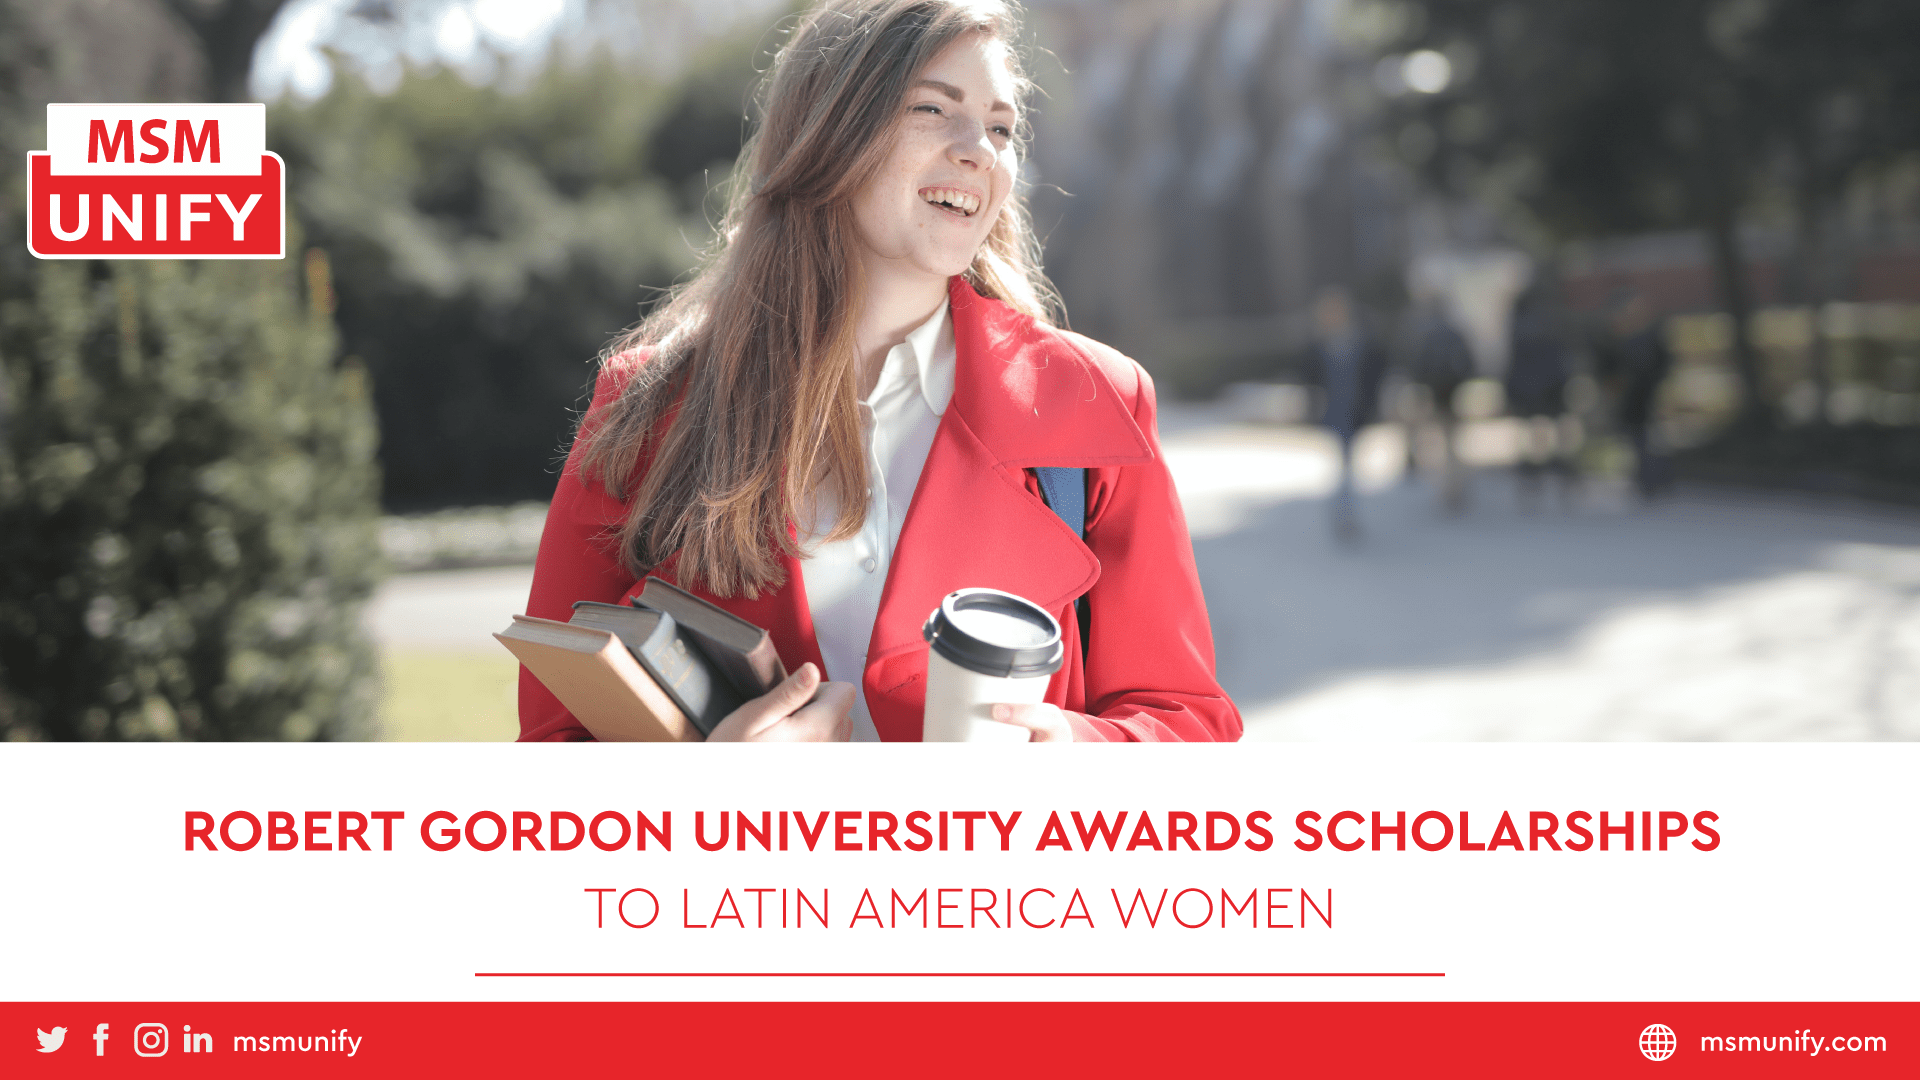 031122 MSM Unify Robert Gordon University Awards Scholarships to Latin American Women min